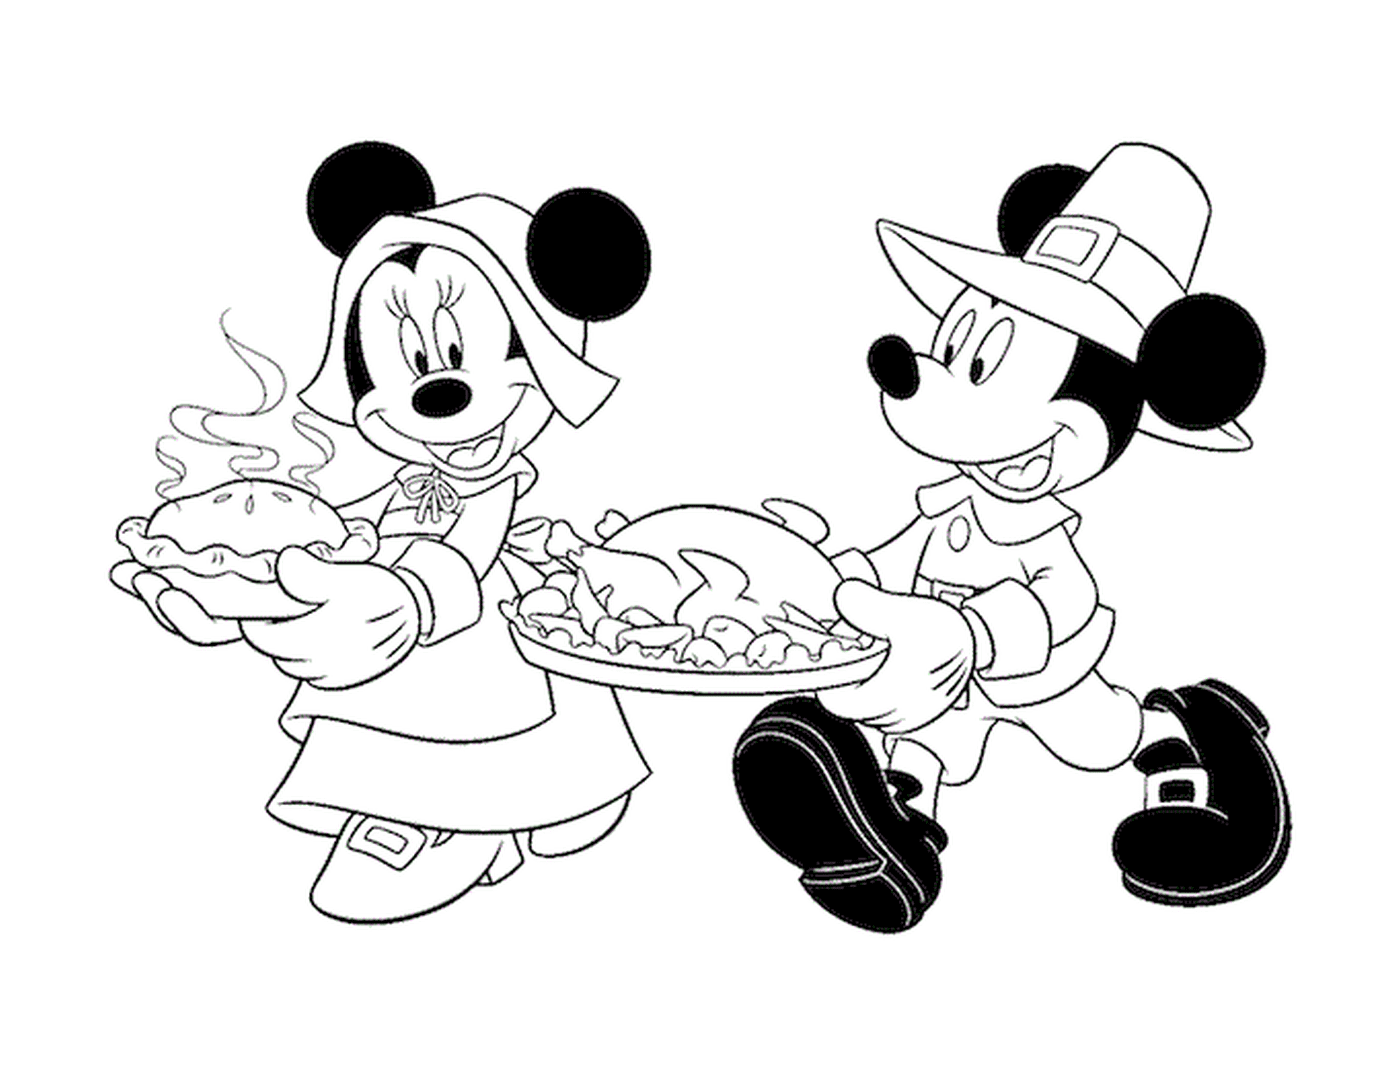  Mickey Maus hält einen Truthahn Teller 